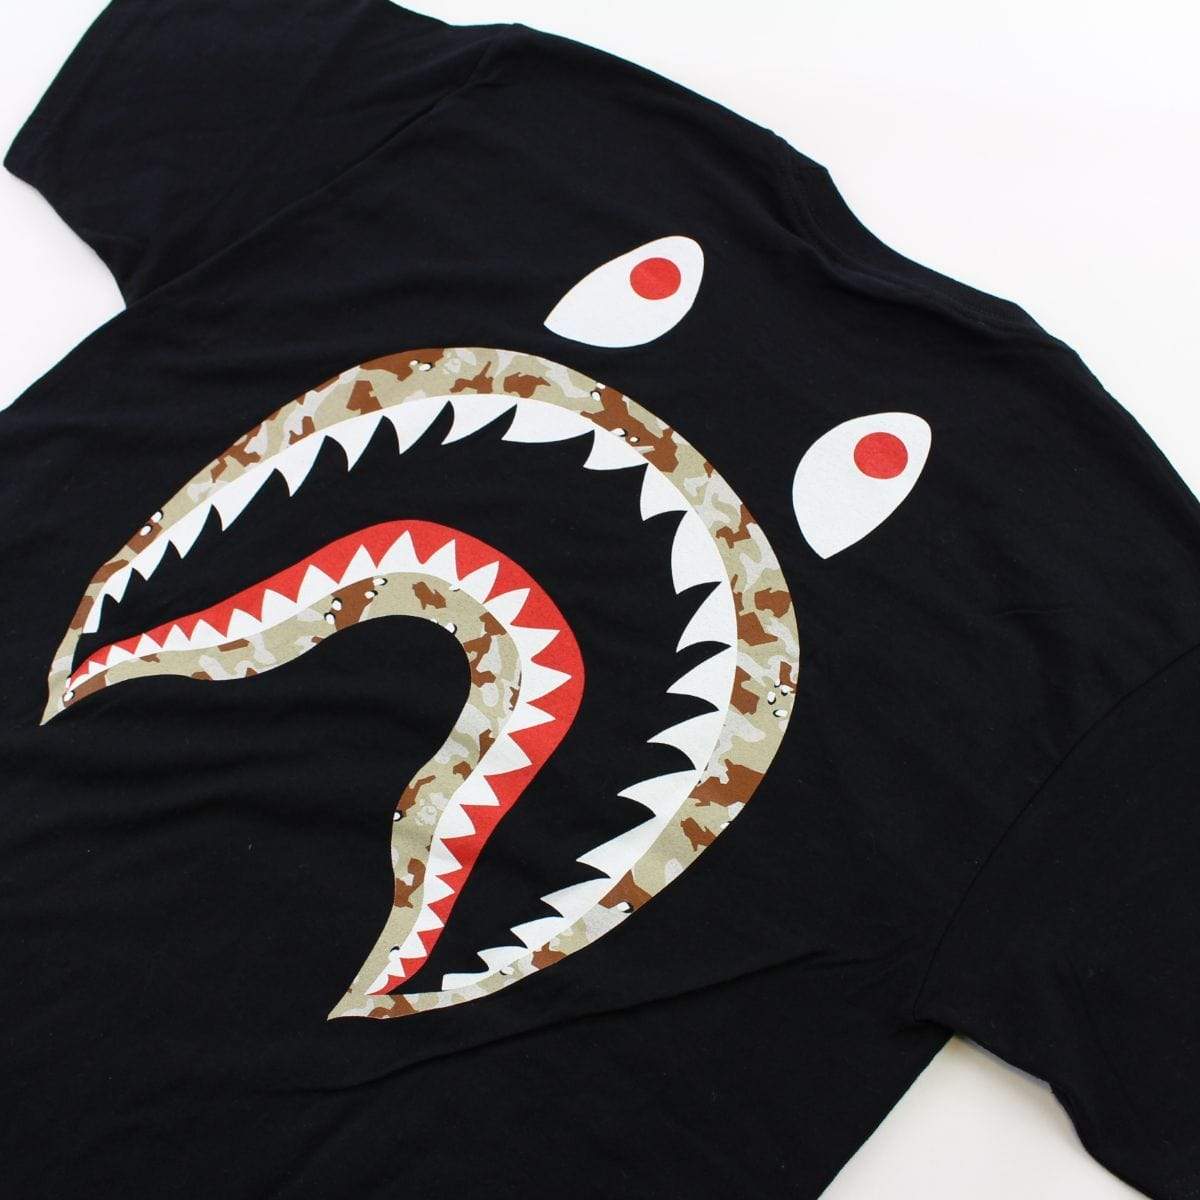 Bape x Stussy Desert Camo Shark Logo Tee Black - SaruGeneral